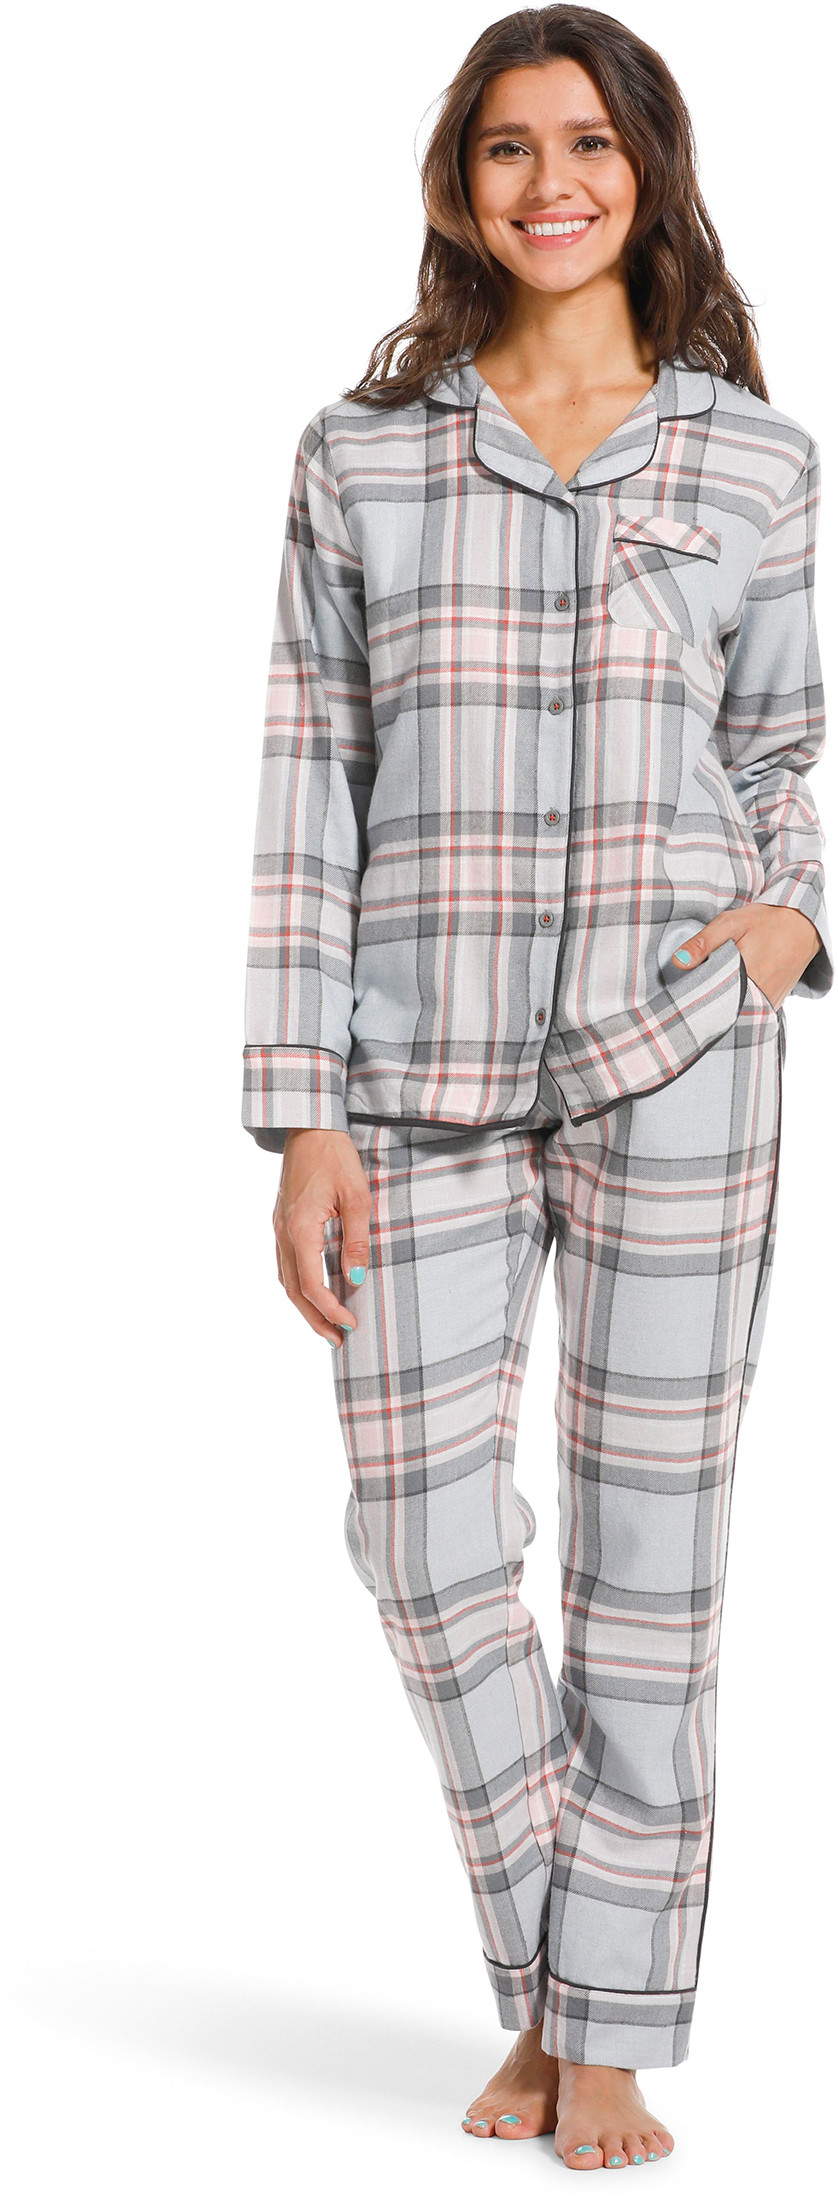 Rebelle dames pyjama flanel 21222-458-6-46